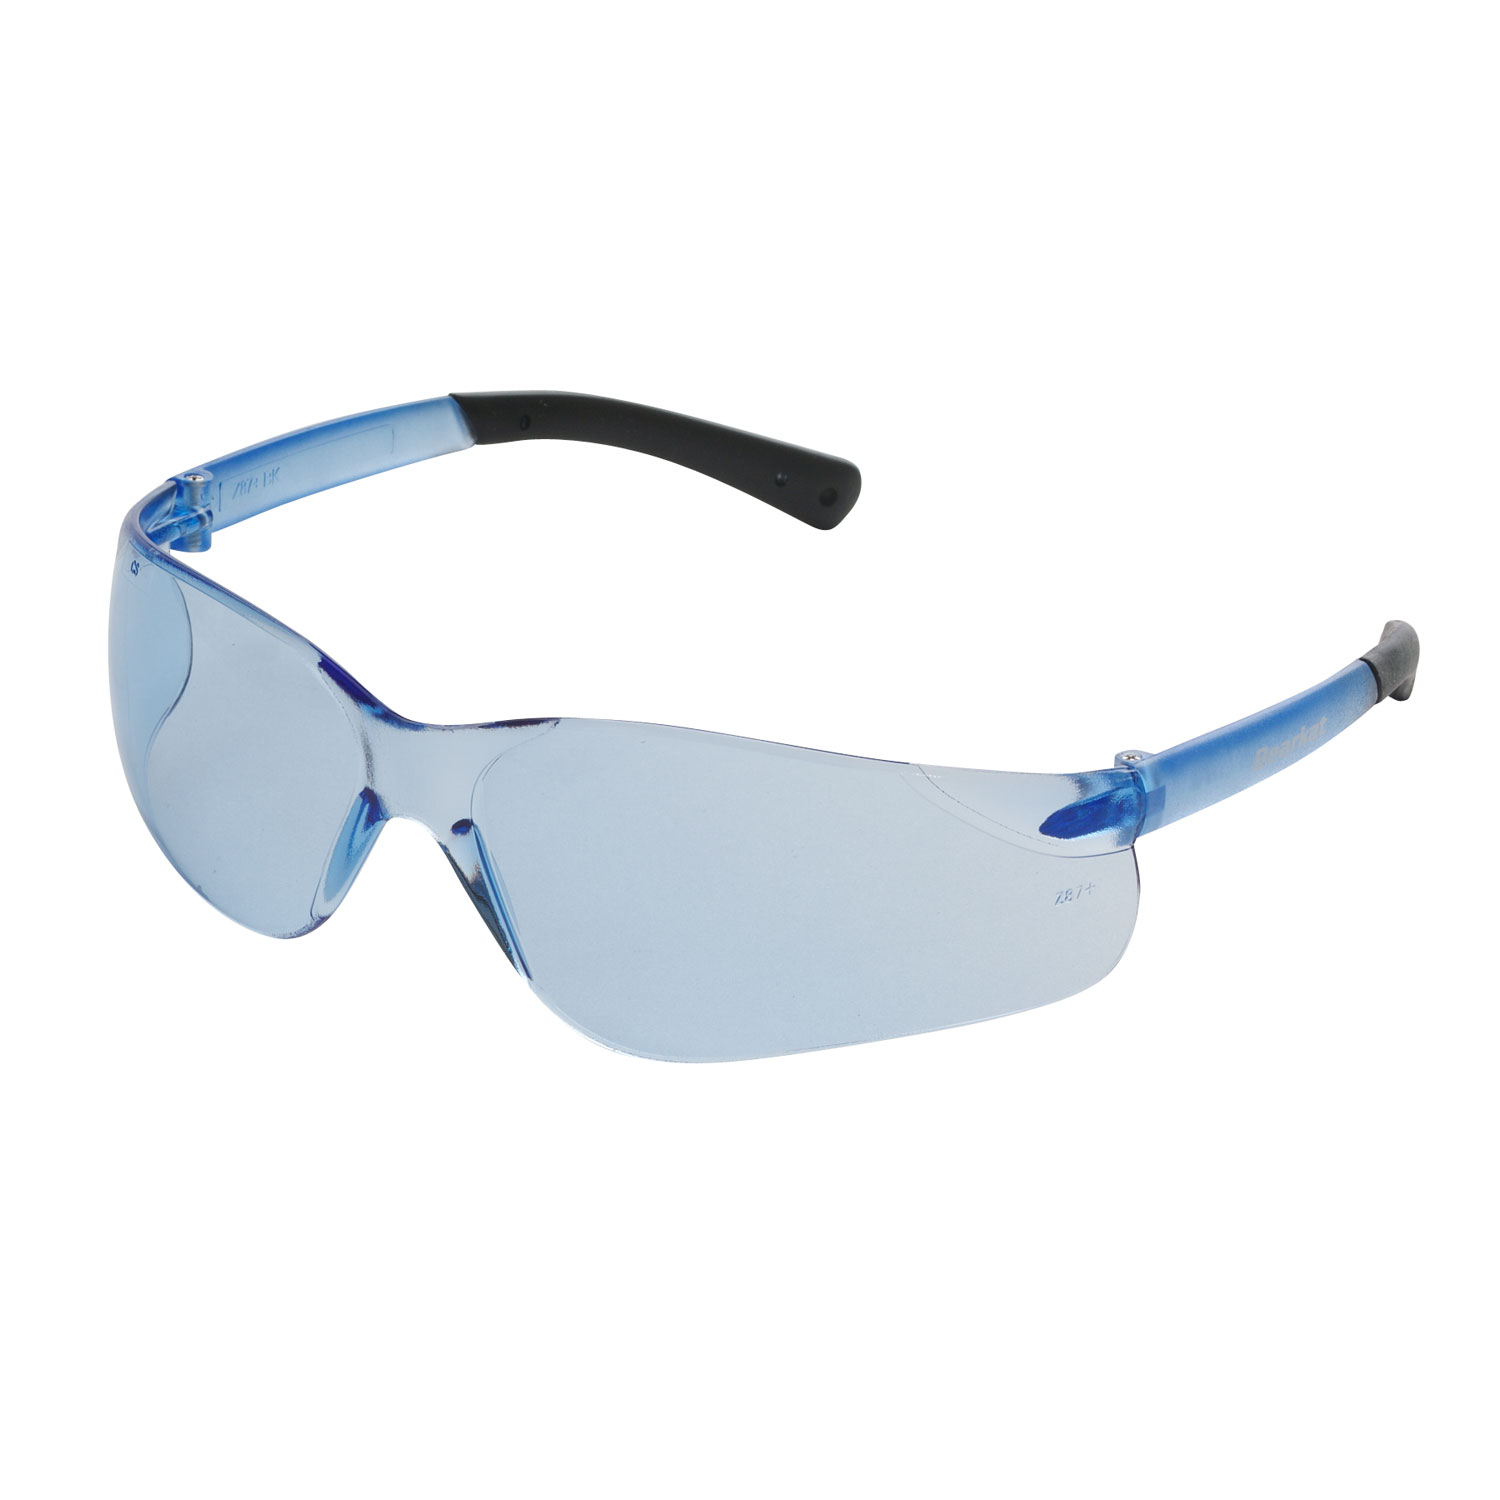 BearKat Protective Eyewear, Blue Lens